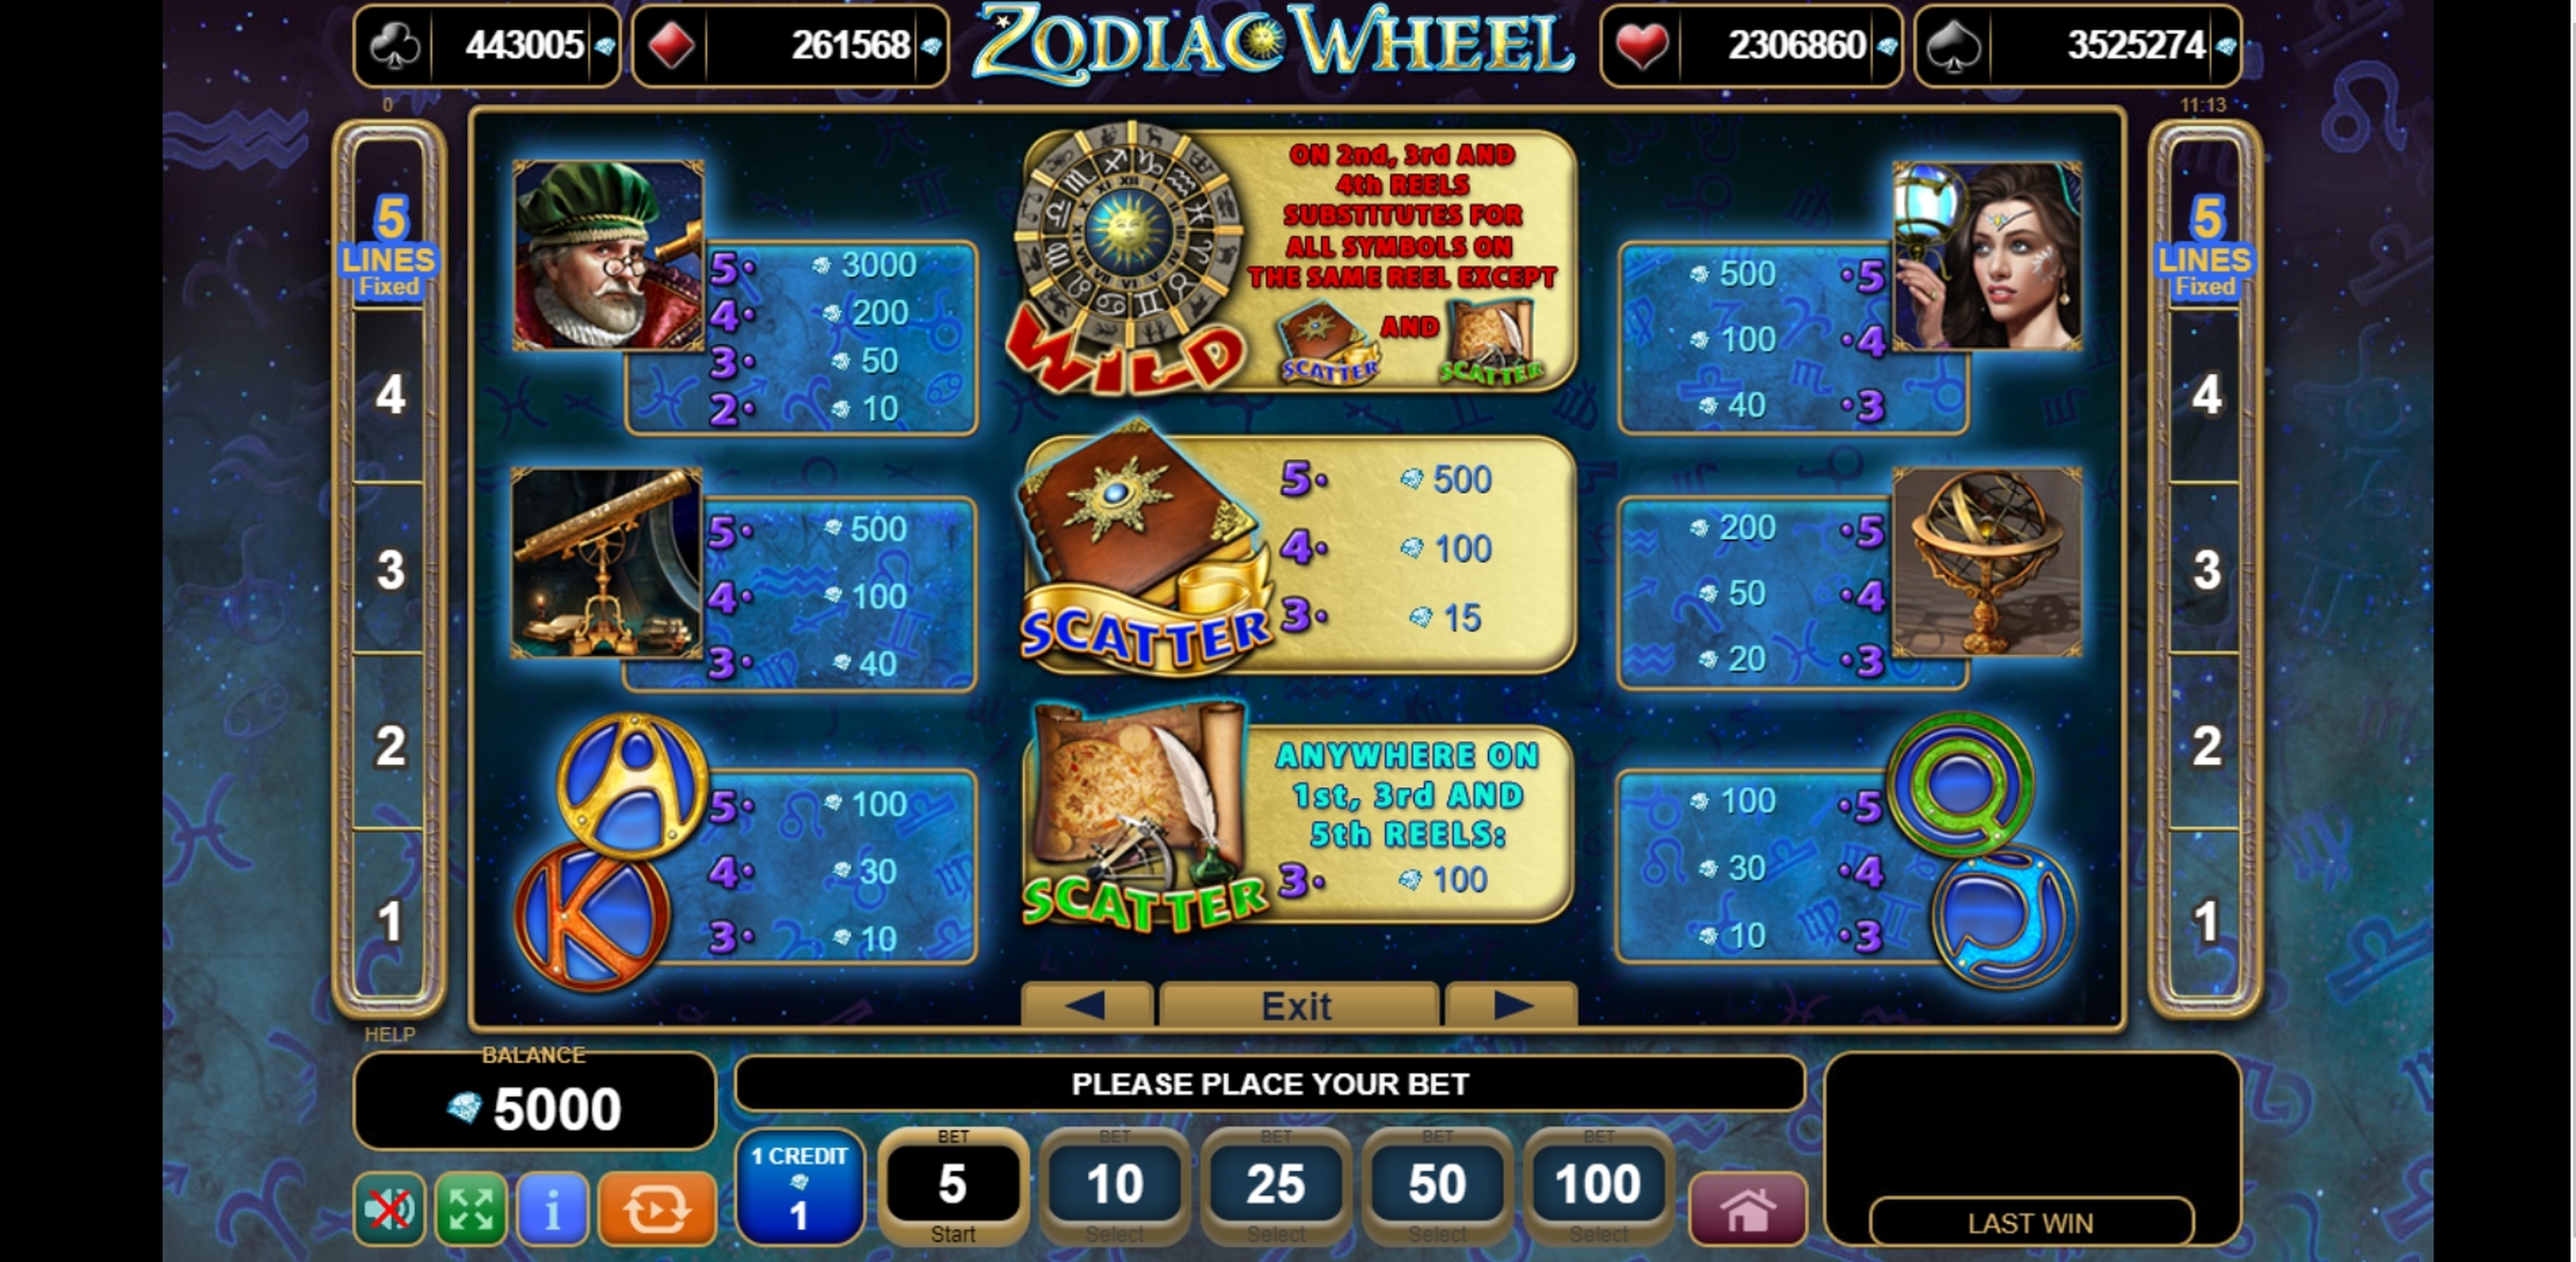 Info of Zodiac Wheel Slot Game by EGT